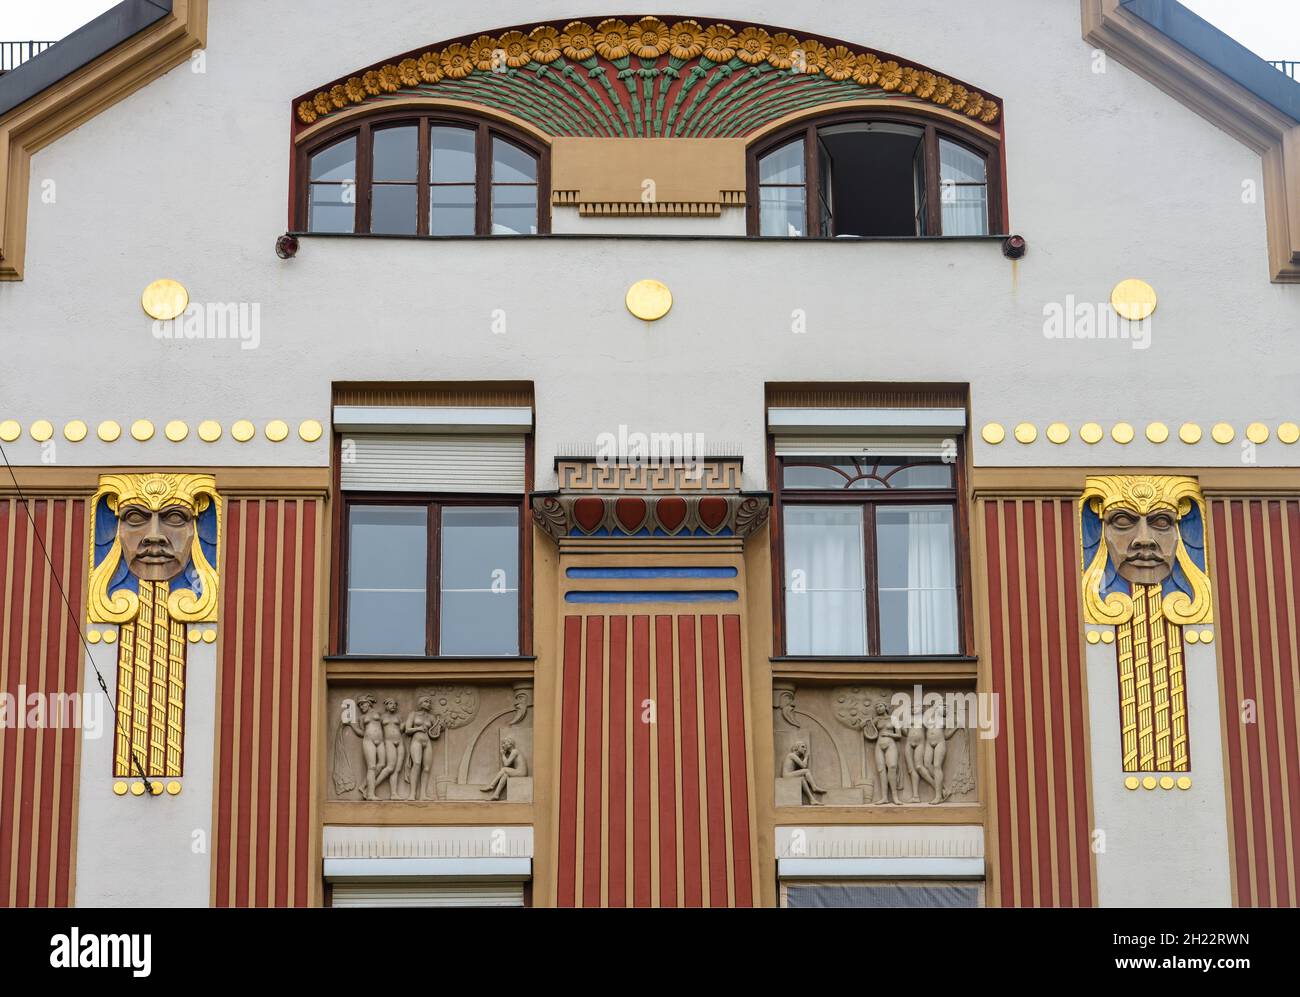 Old building, Art Nouveau, Roemerstrasse 11, Schwabing, Munich, Bavaria, Roemerstrasse, Germany Stock Photo